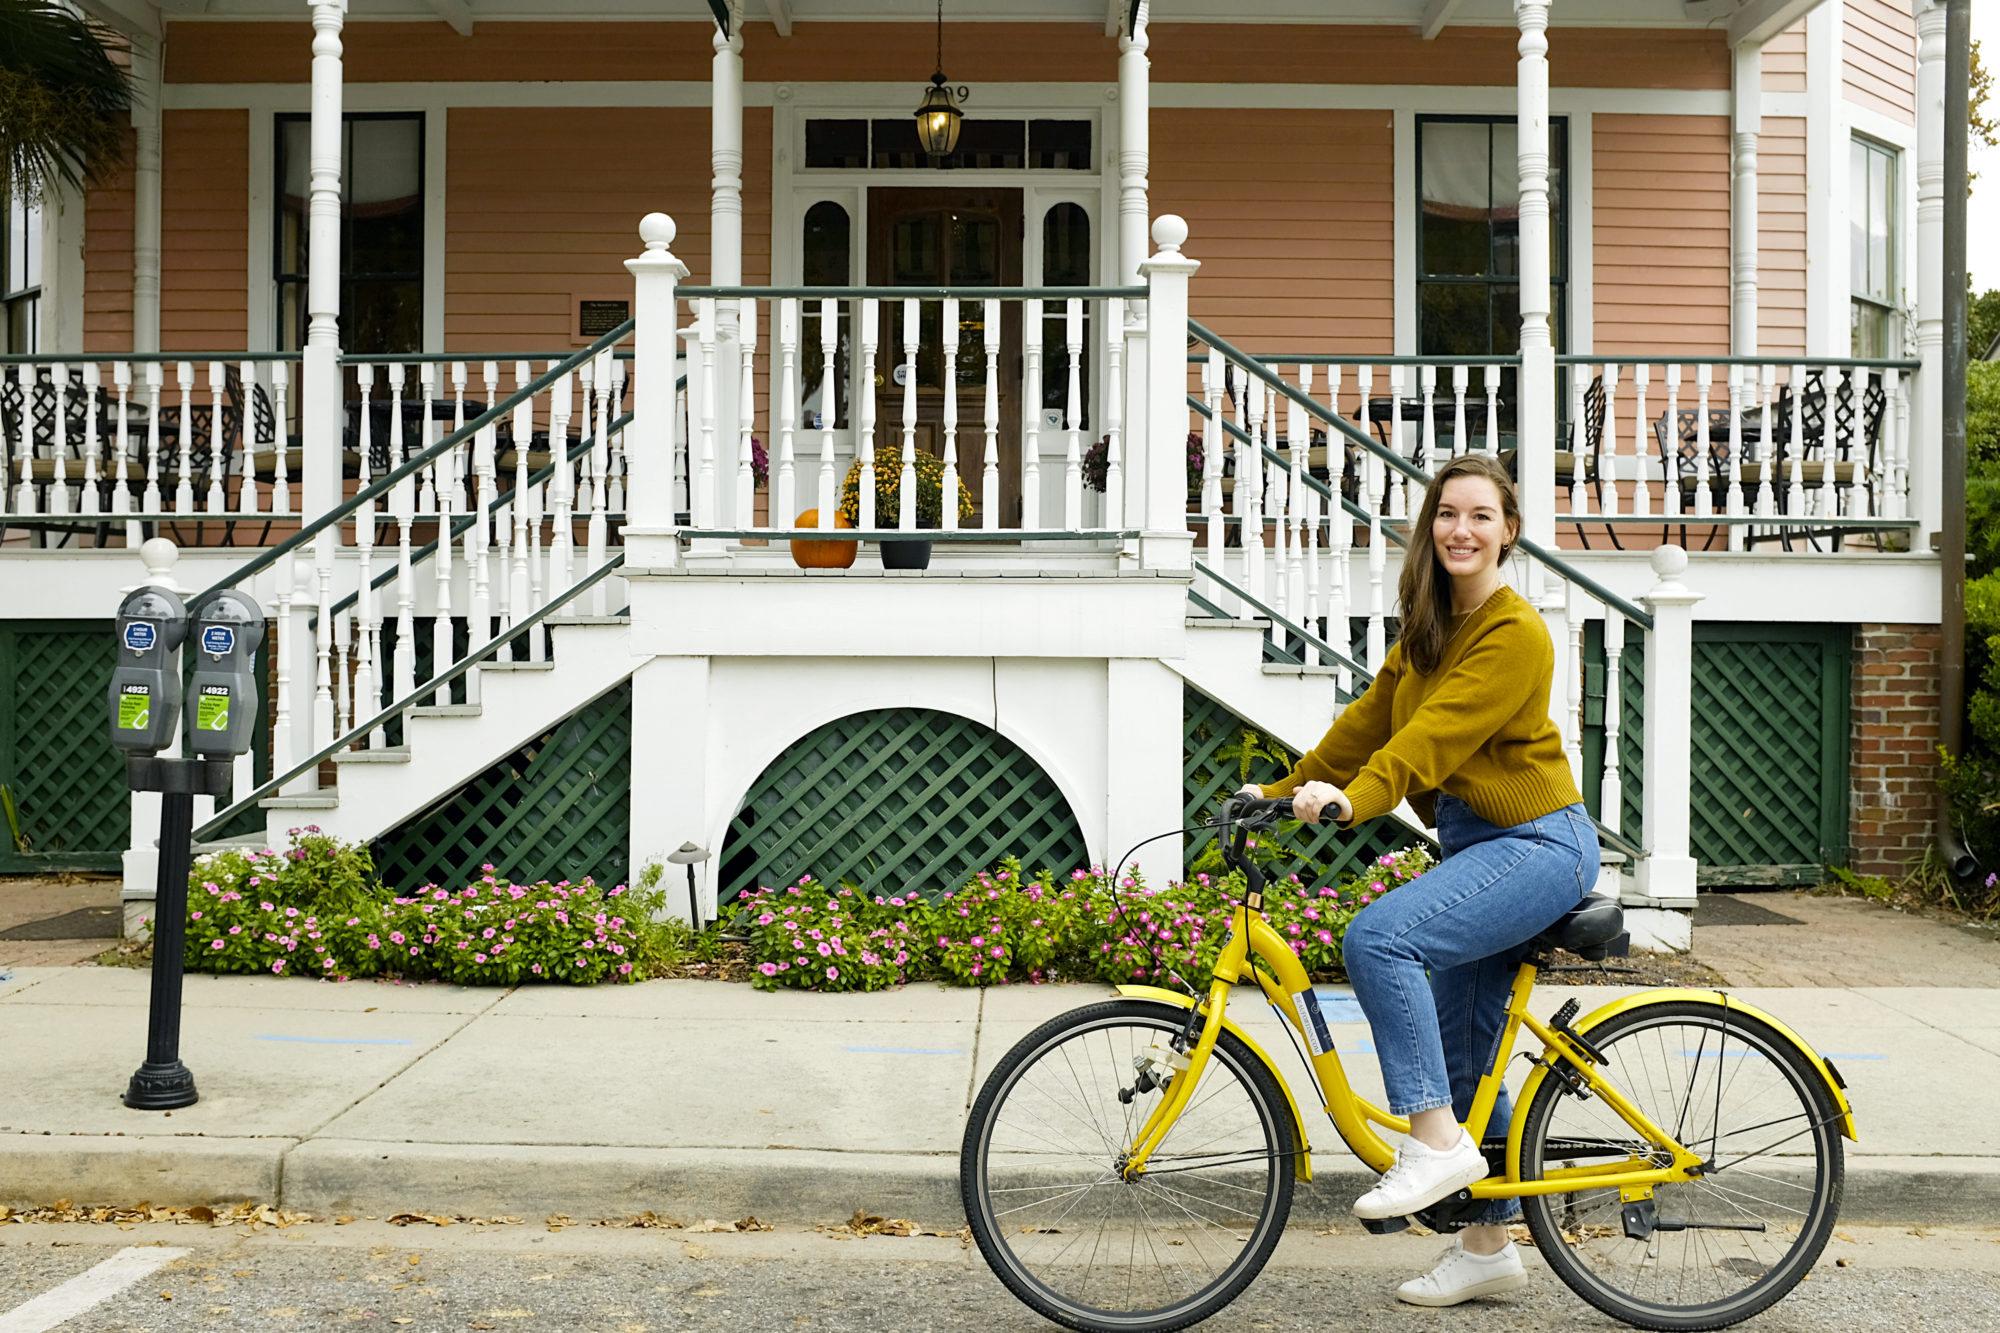 Alyssa rides a bike in front of The Beaufort Inn